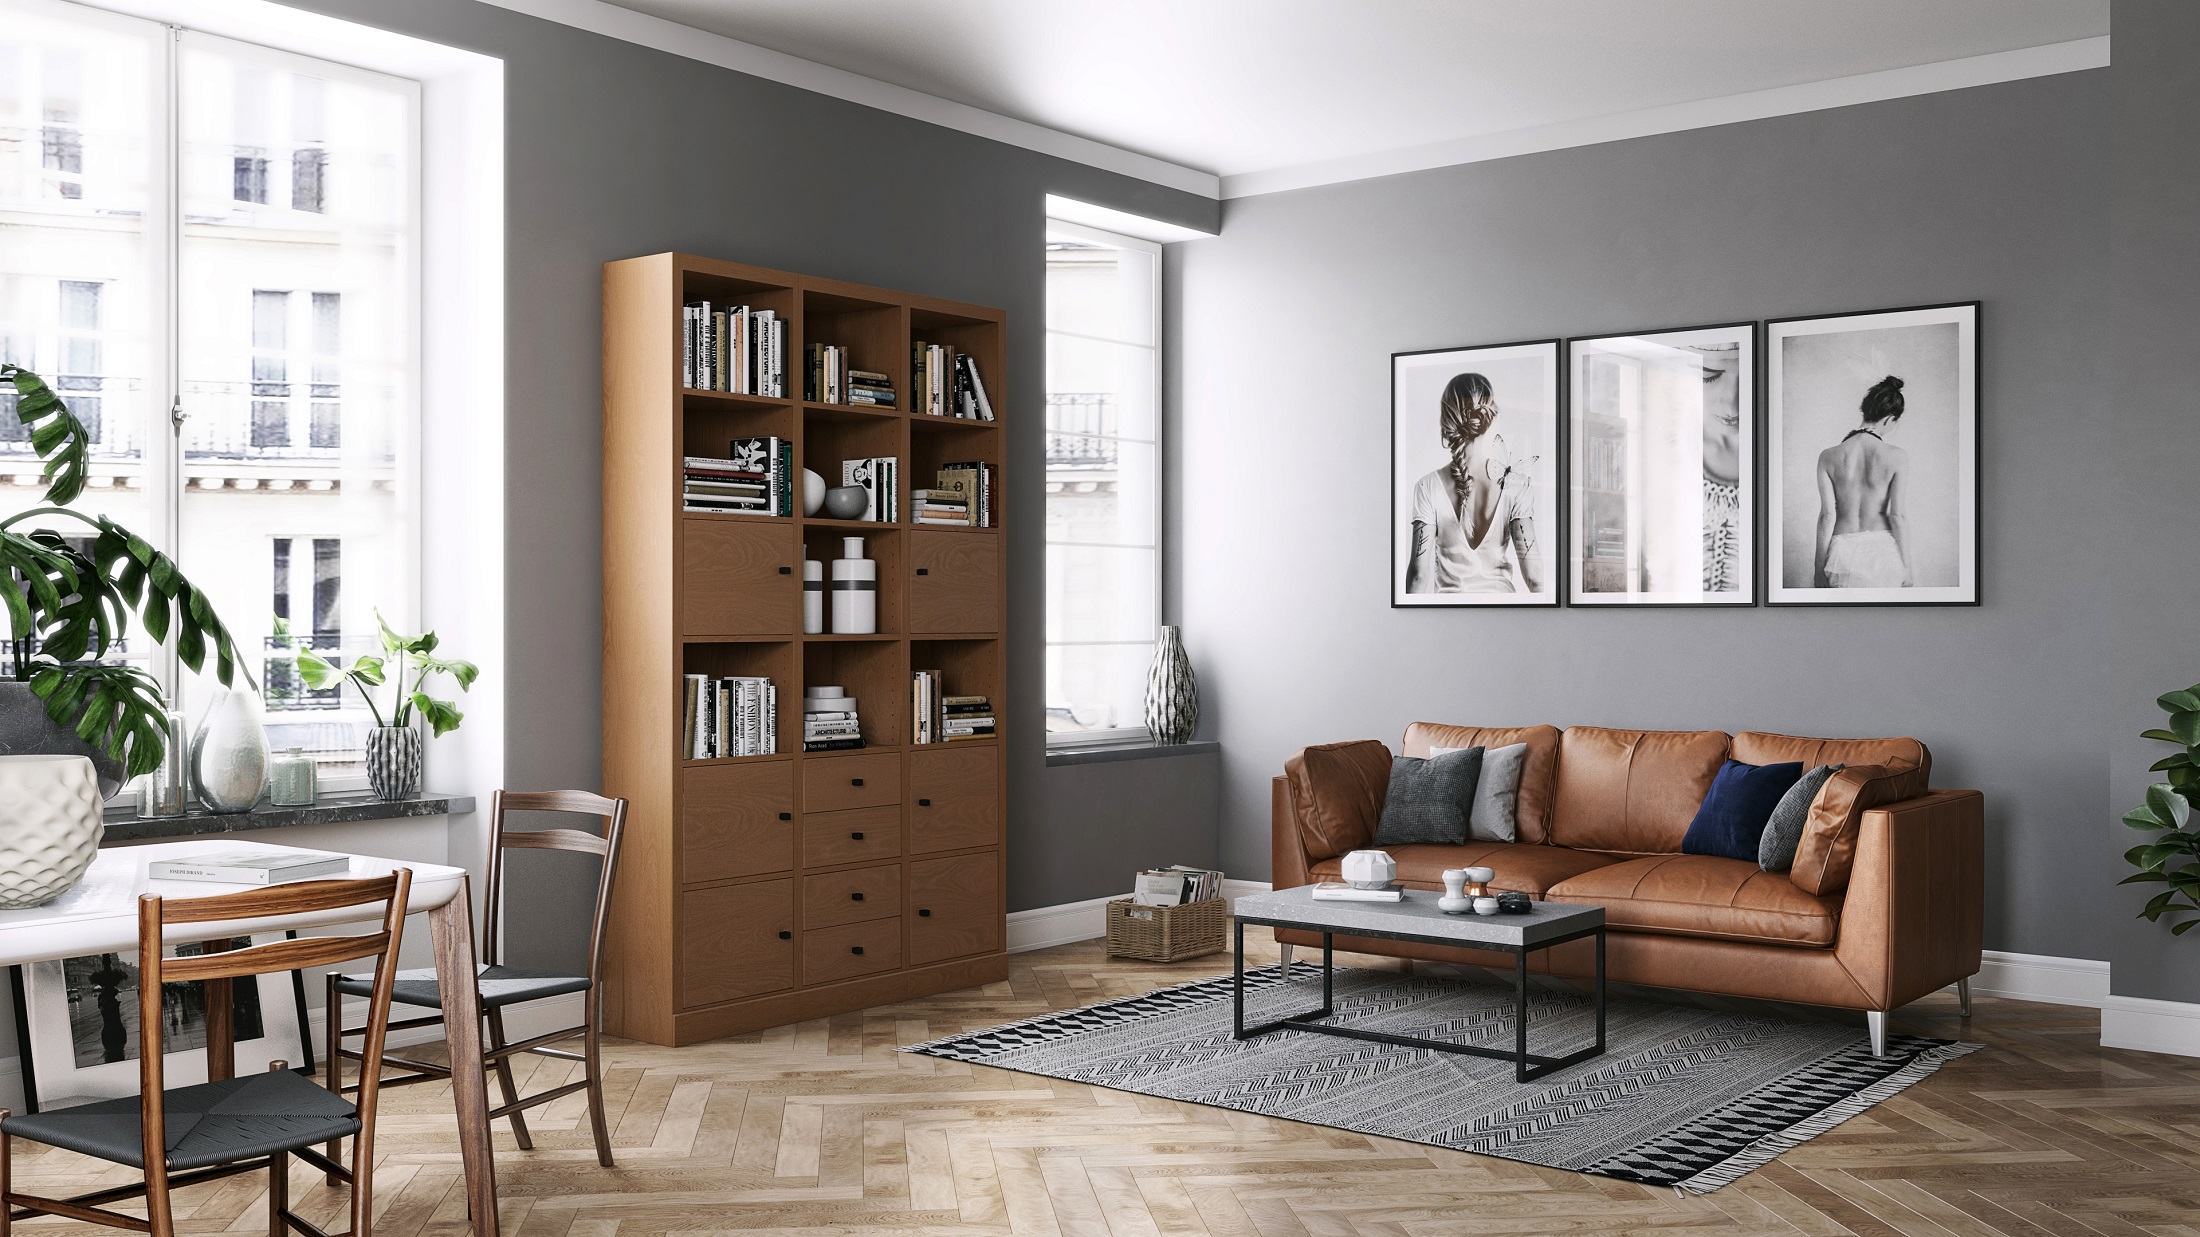 Flexmodern cherry wood bookshelf in a modern urban apartment